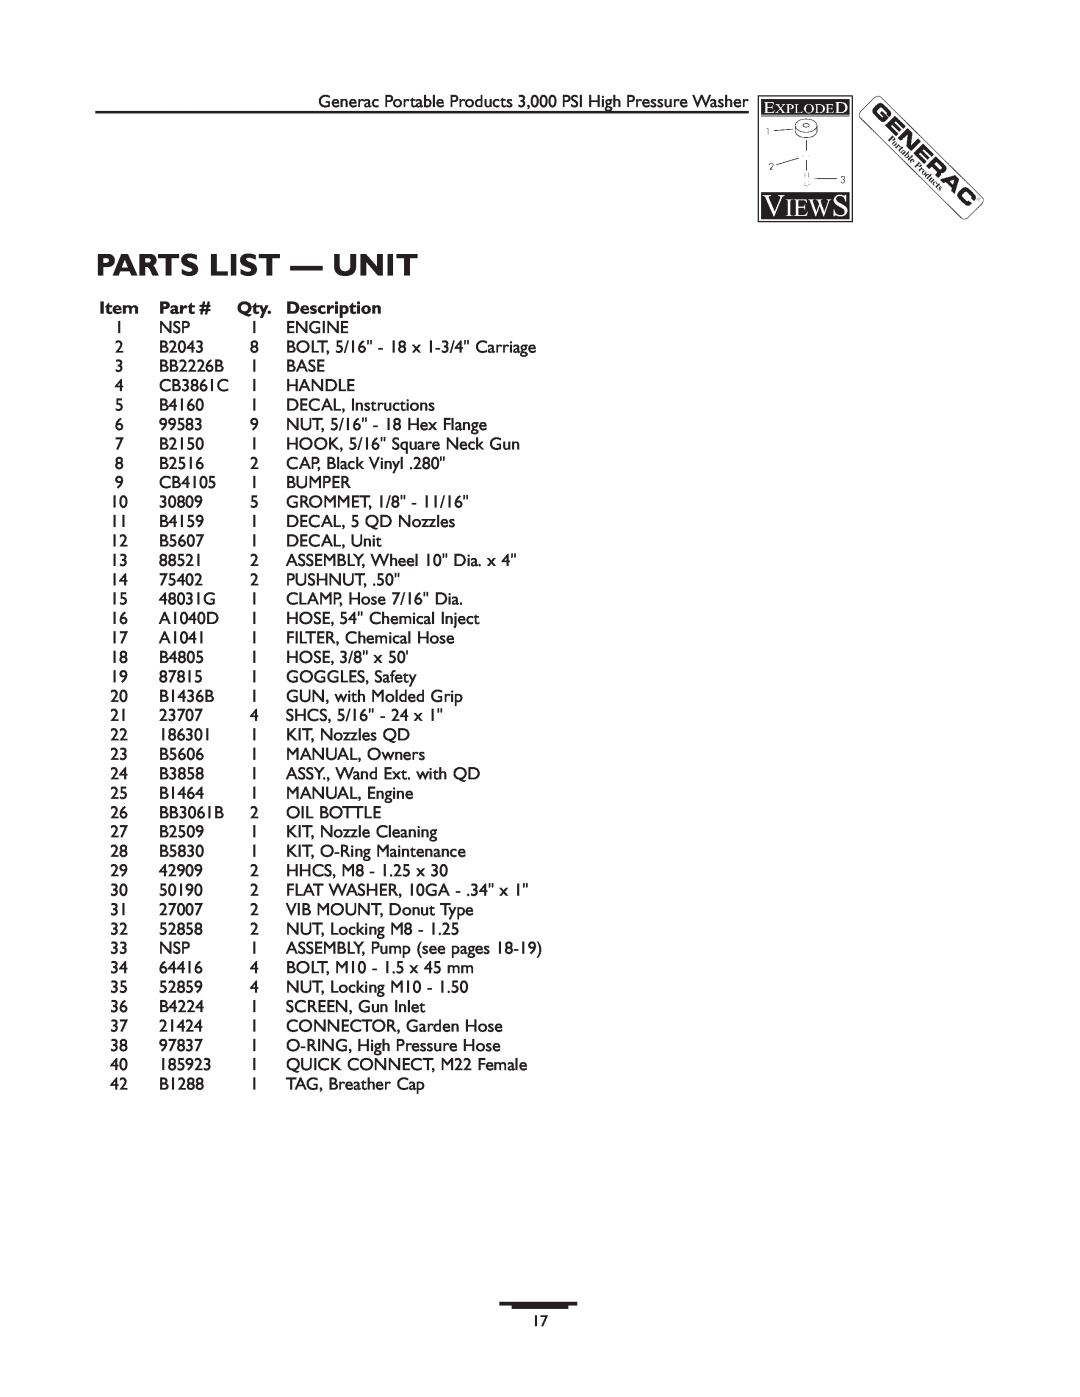 Generac 1418-0 manual Parts List - Unit, Description 